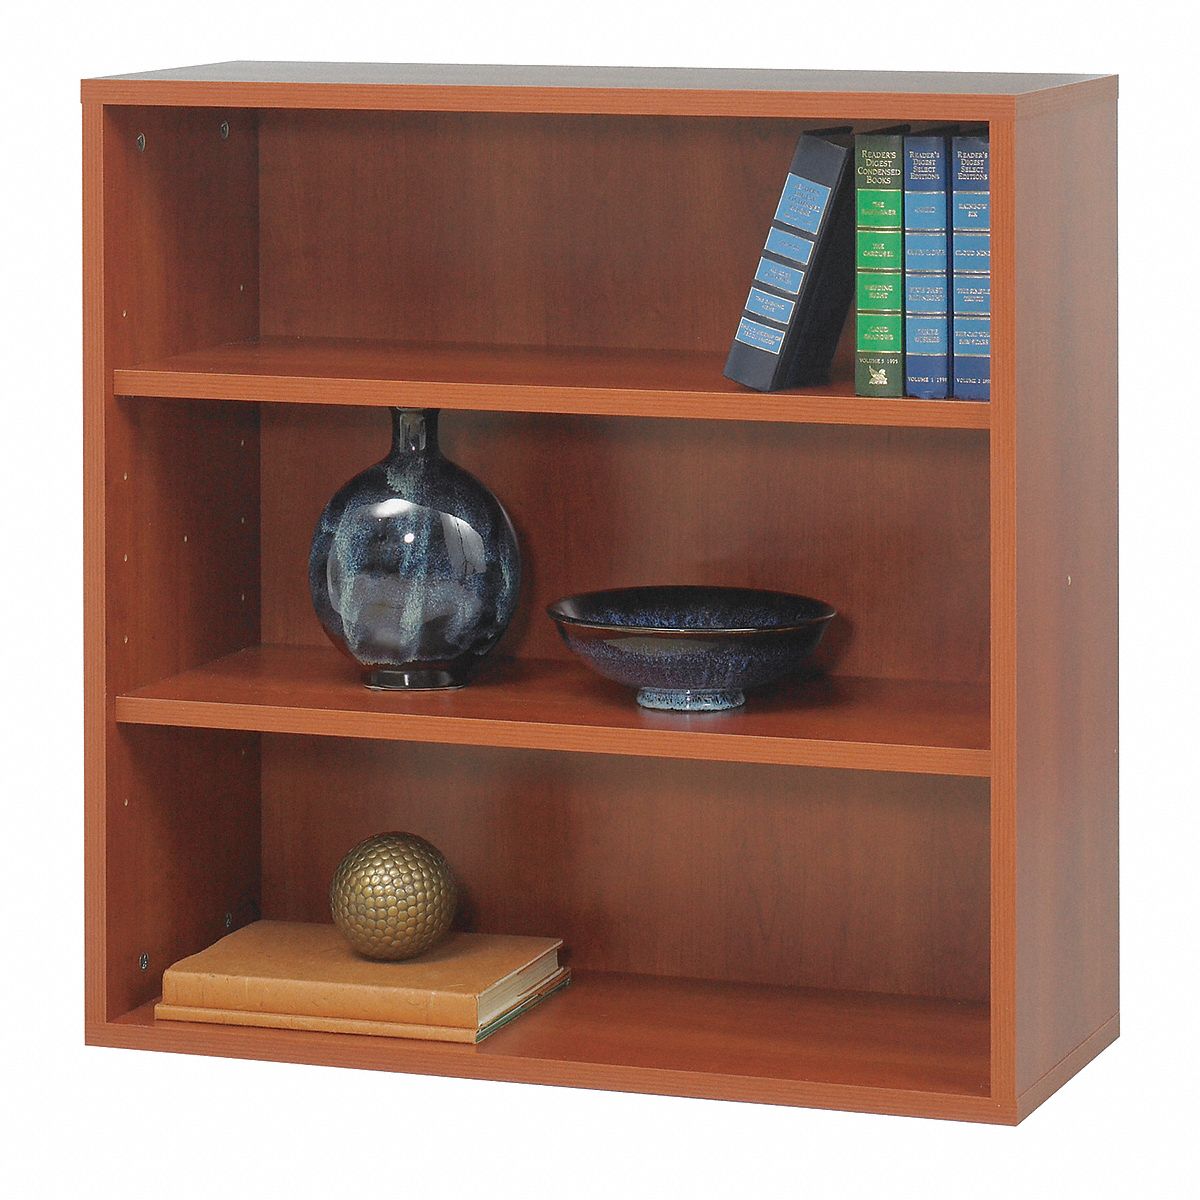 20C530 - Bookcase 2 Shelf Cherry